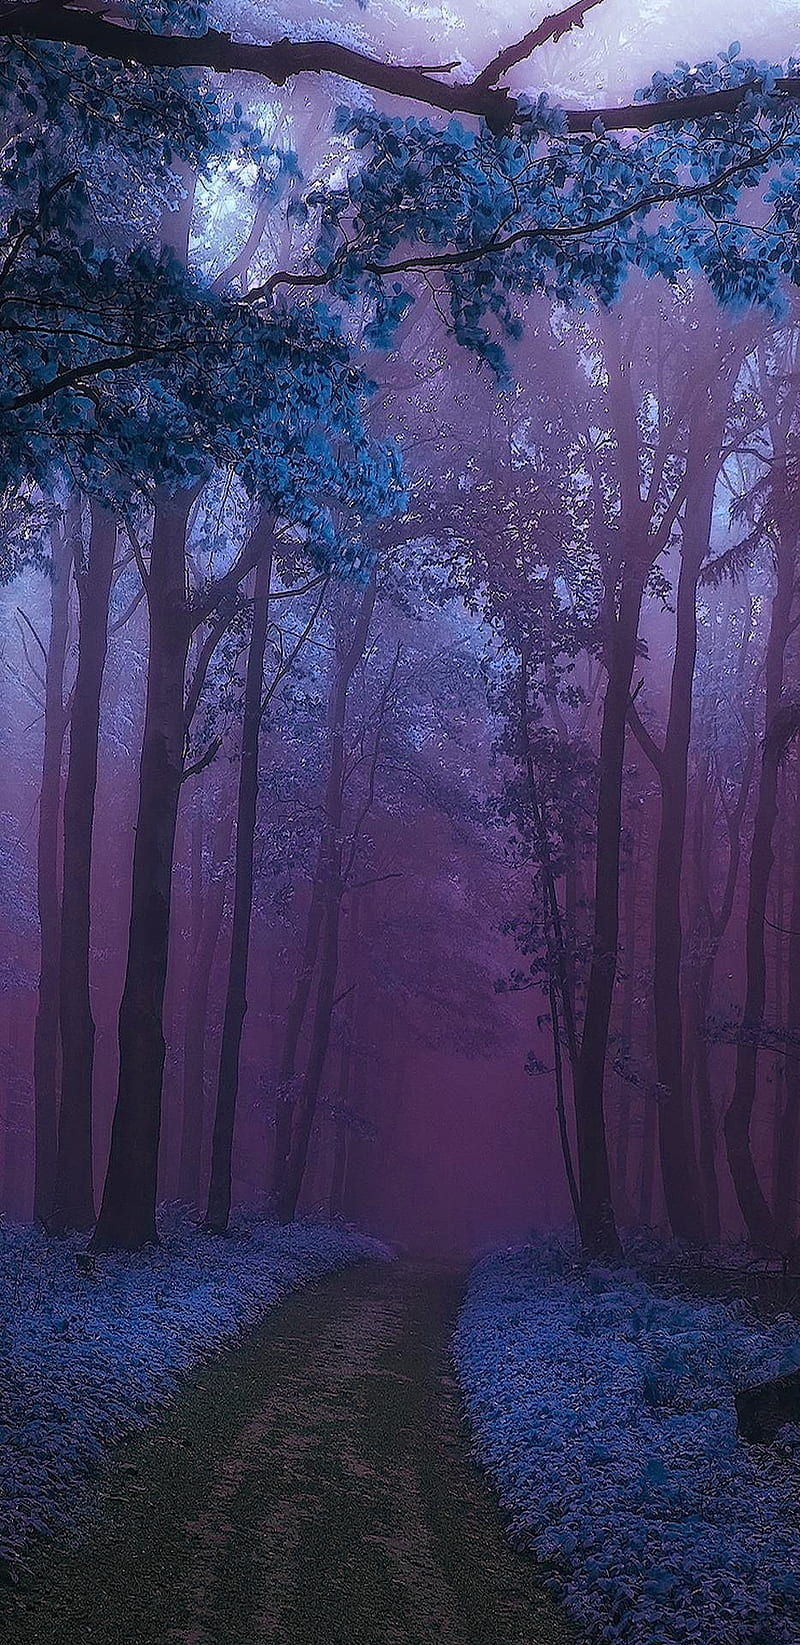 1920x1080px, 1080P free download | Purple wonderland, forest, magic, HD ...